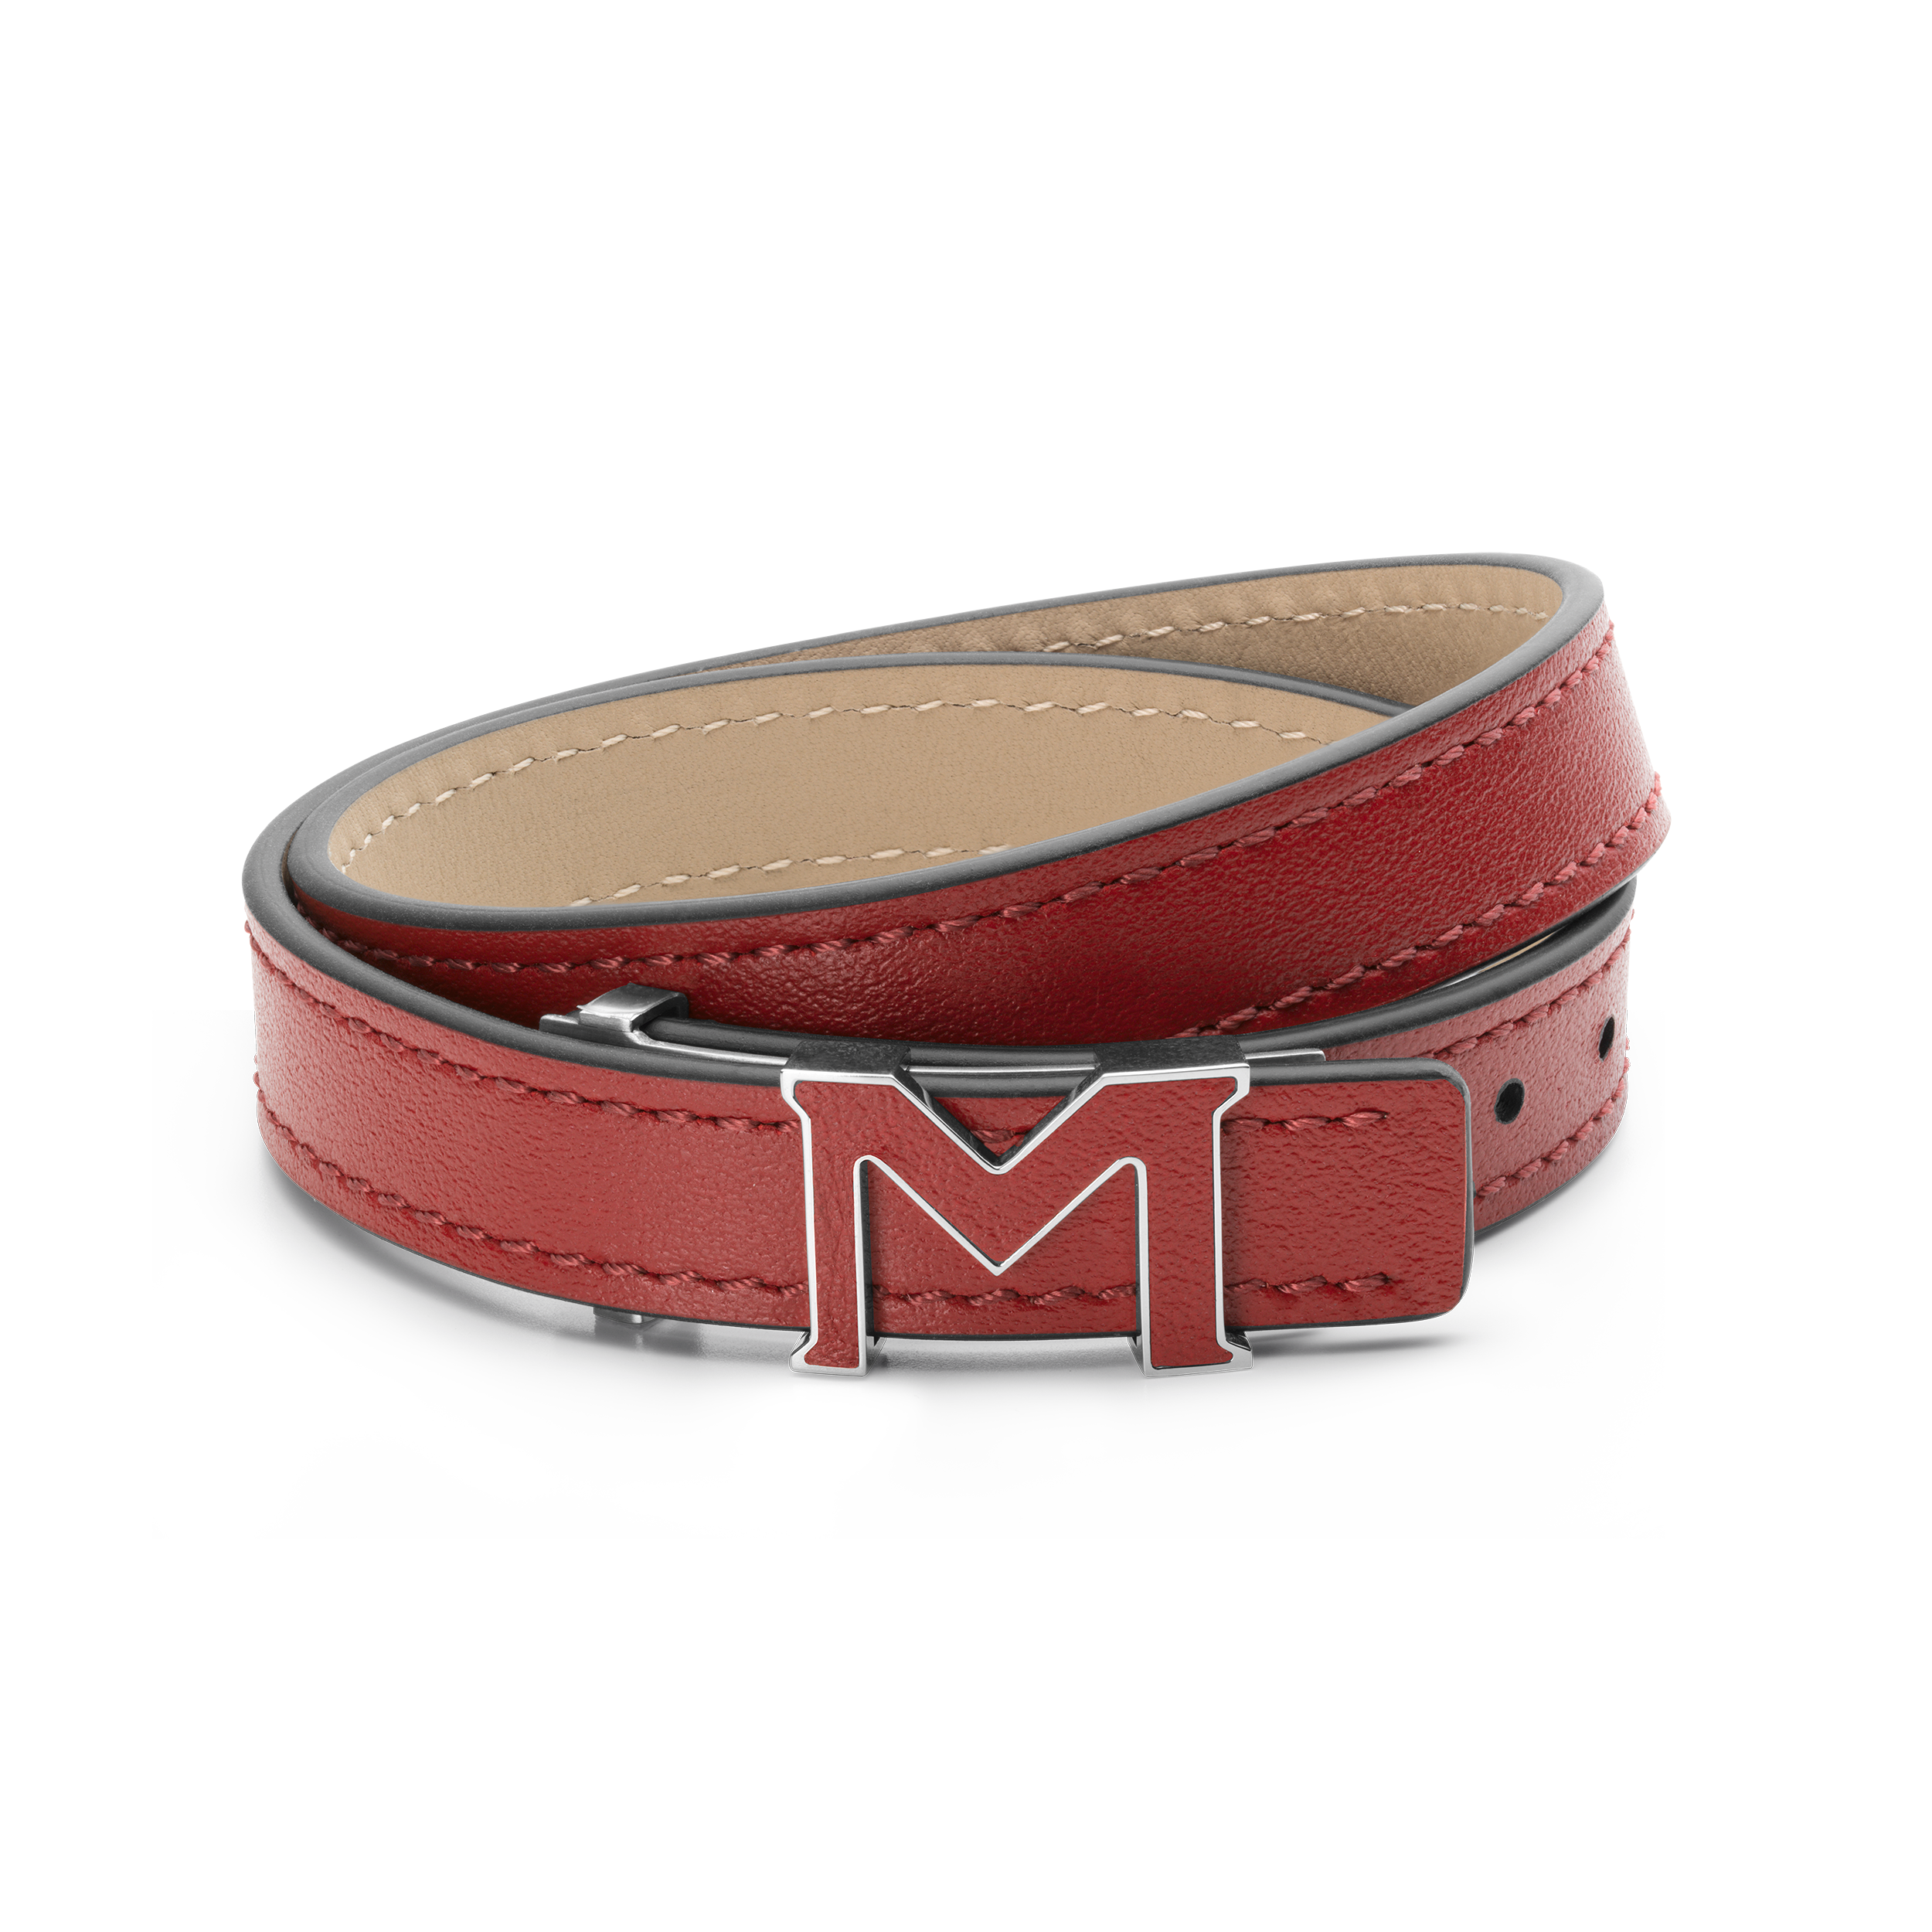 Bracelet Montblanc M Logo red, image 1